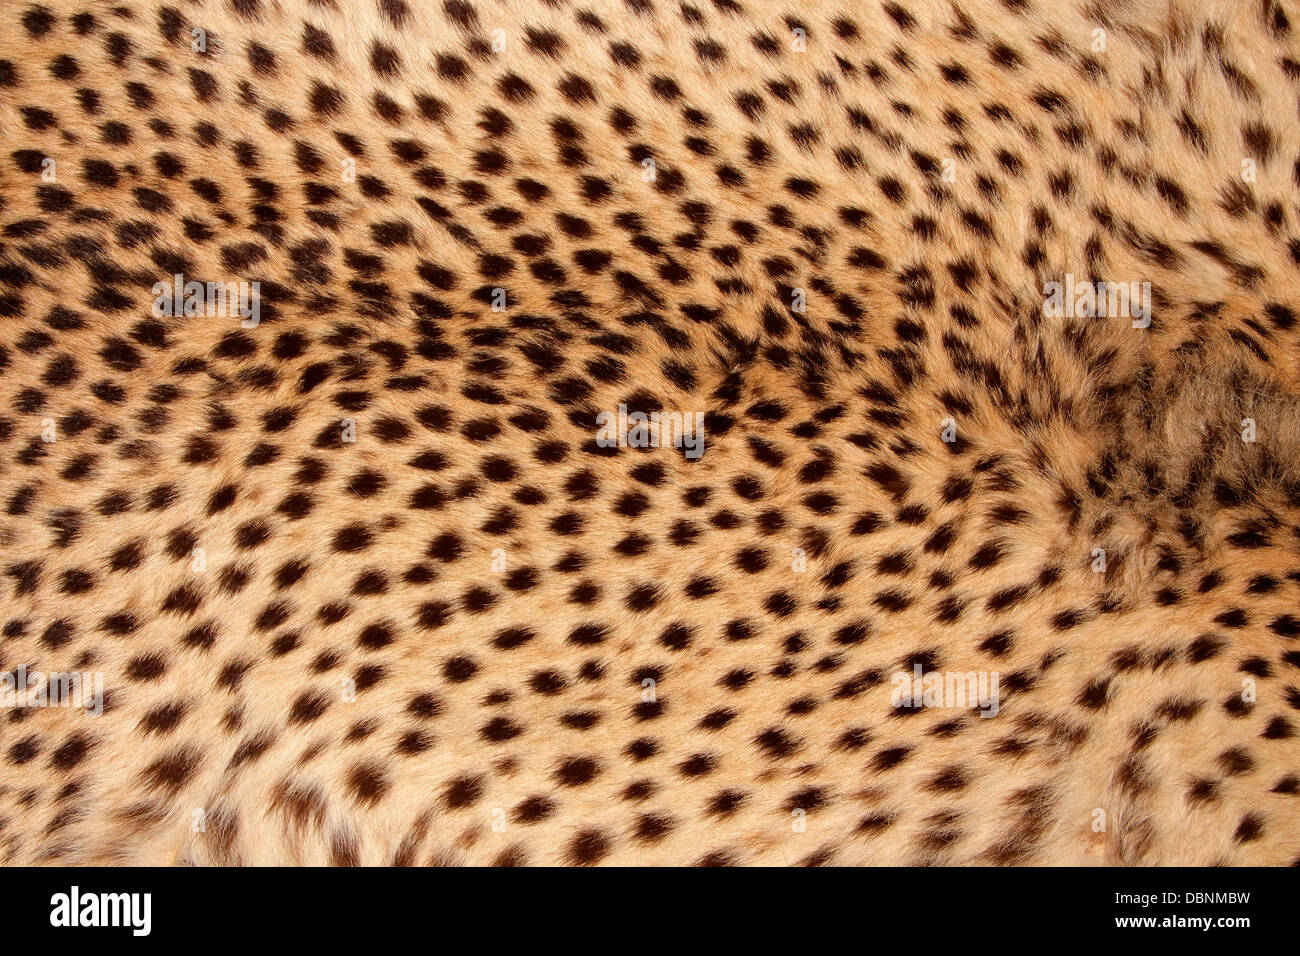 Close-up view of the skin of a cheetah (Acinonyx jubatus) Stock Photo